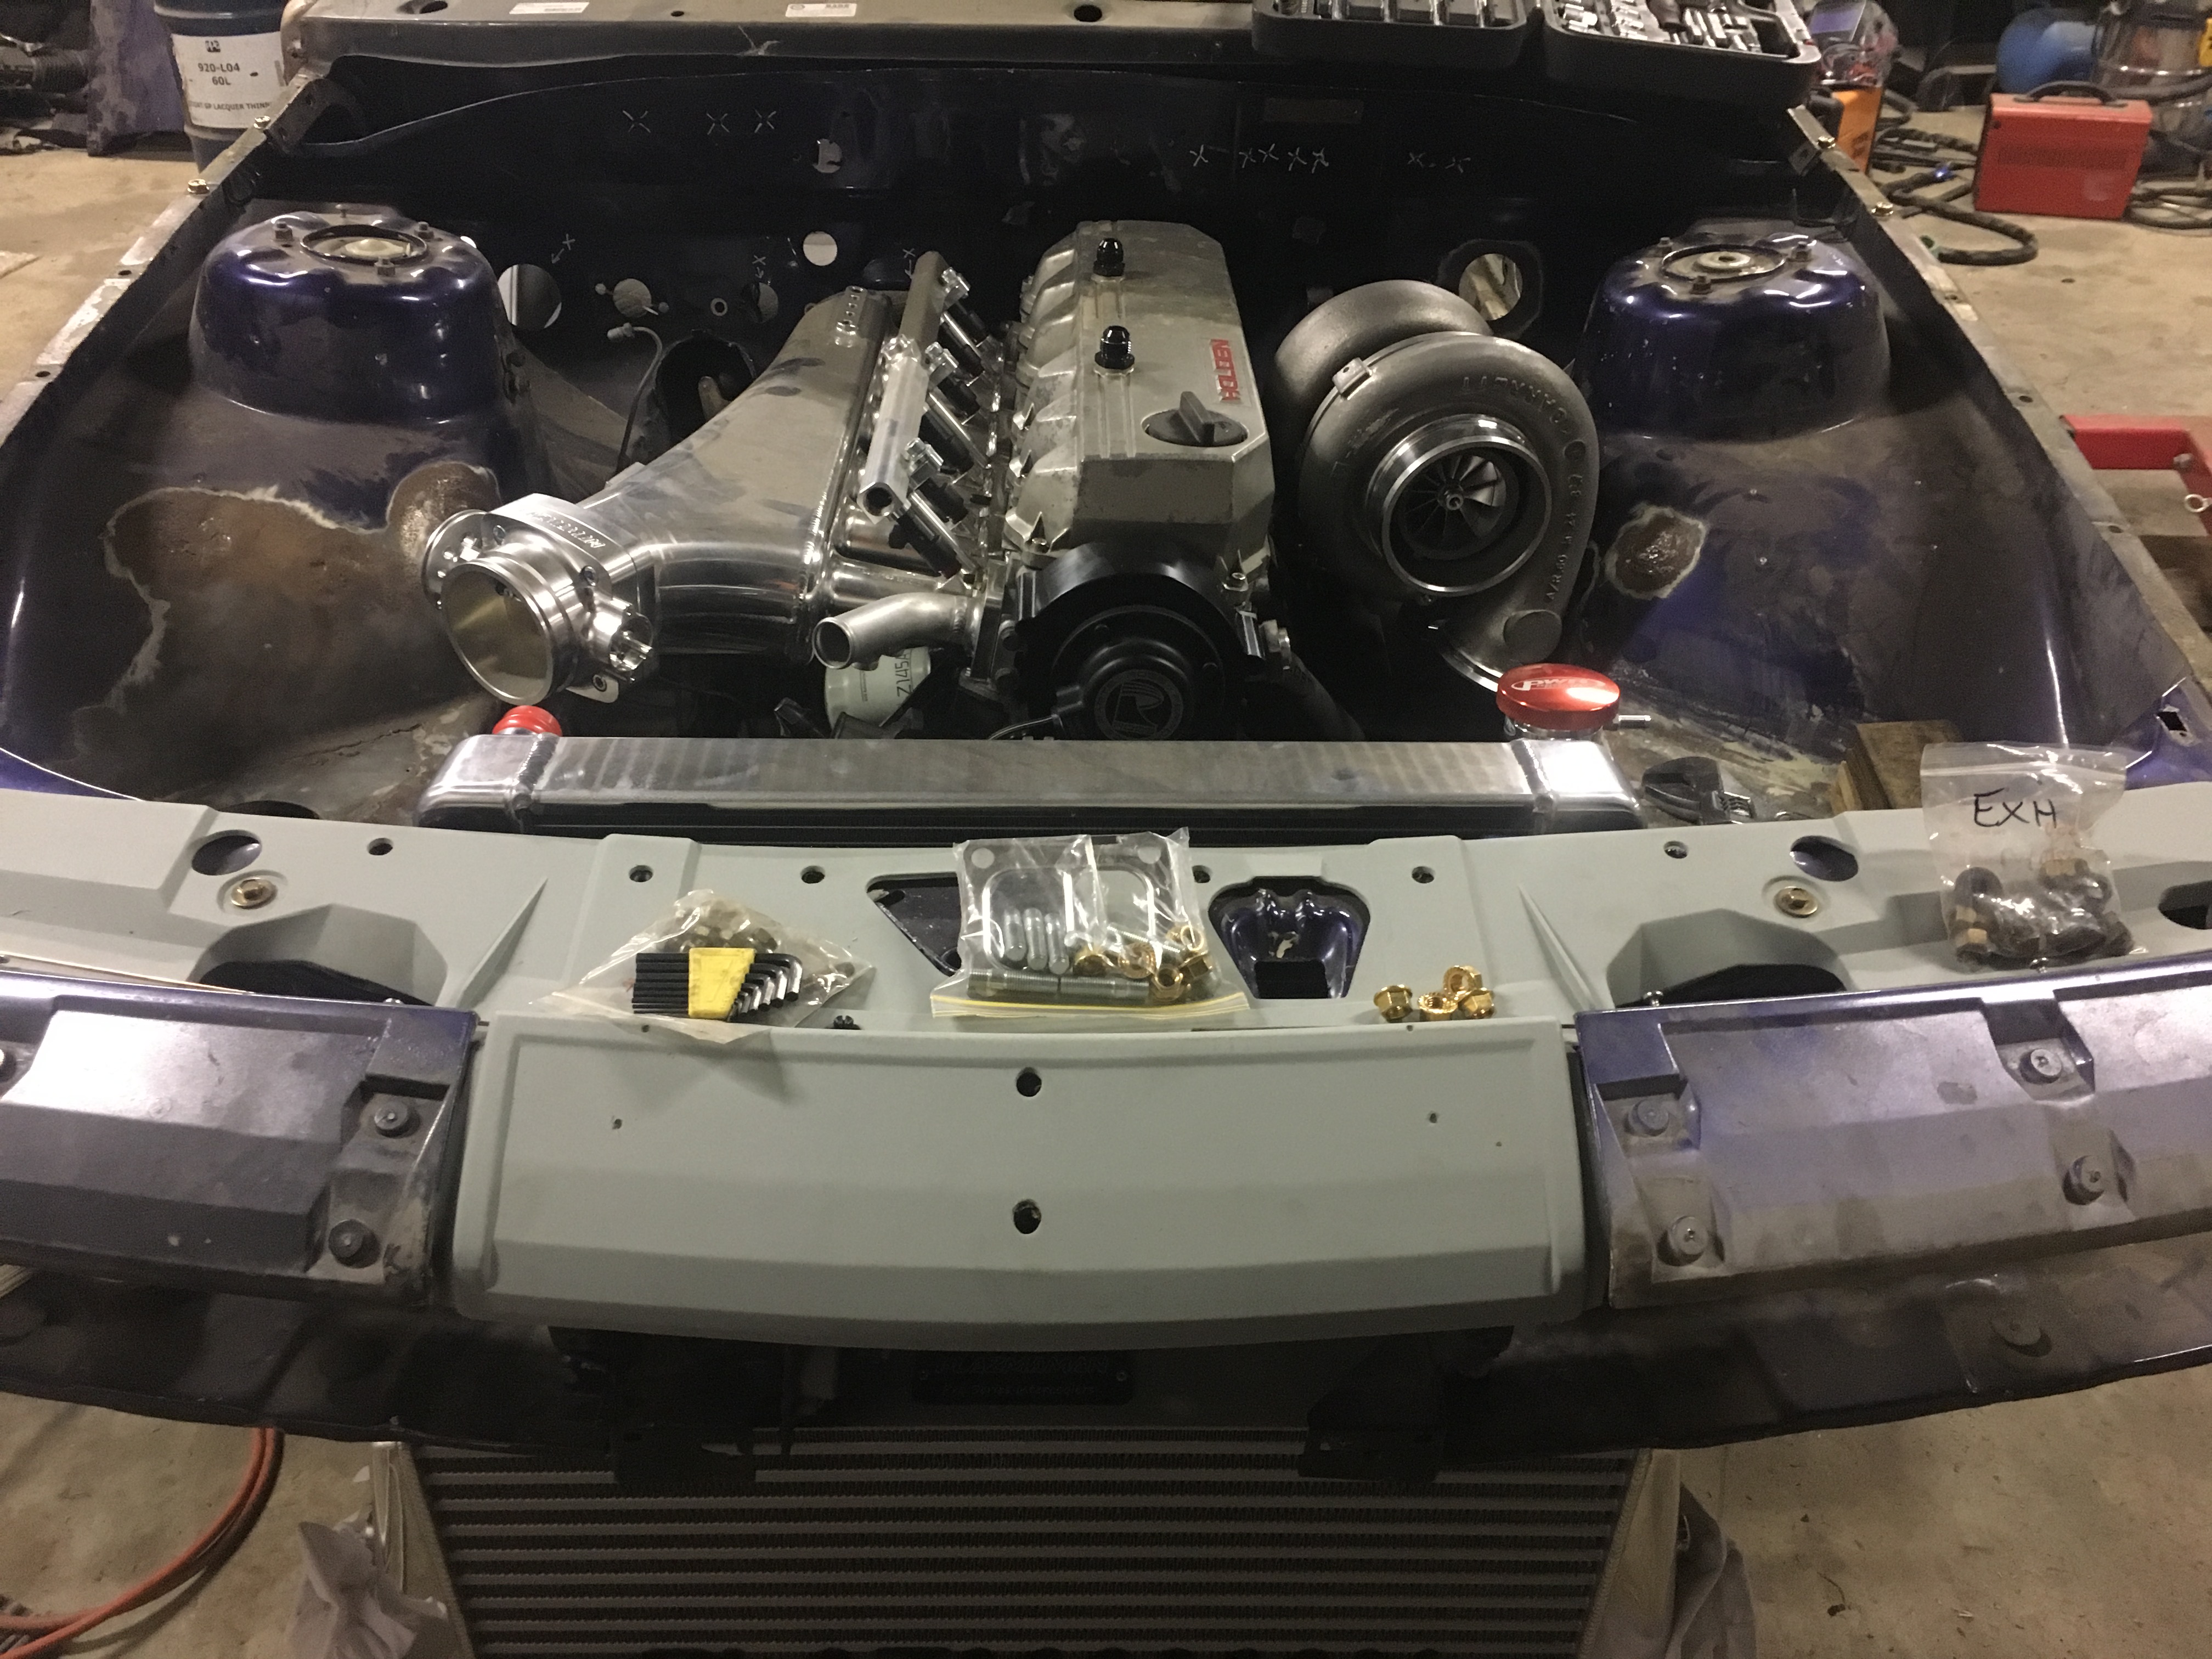 VL Turbo/rb30 Parts